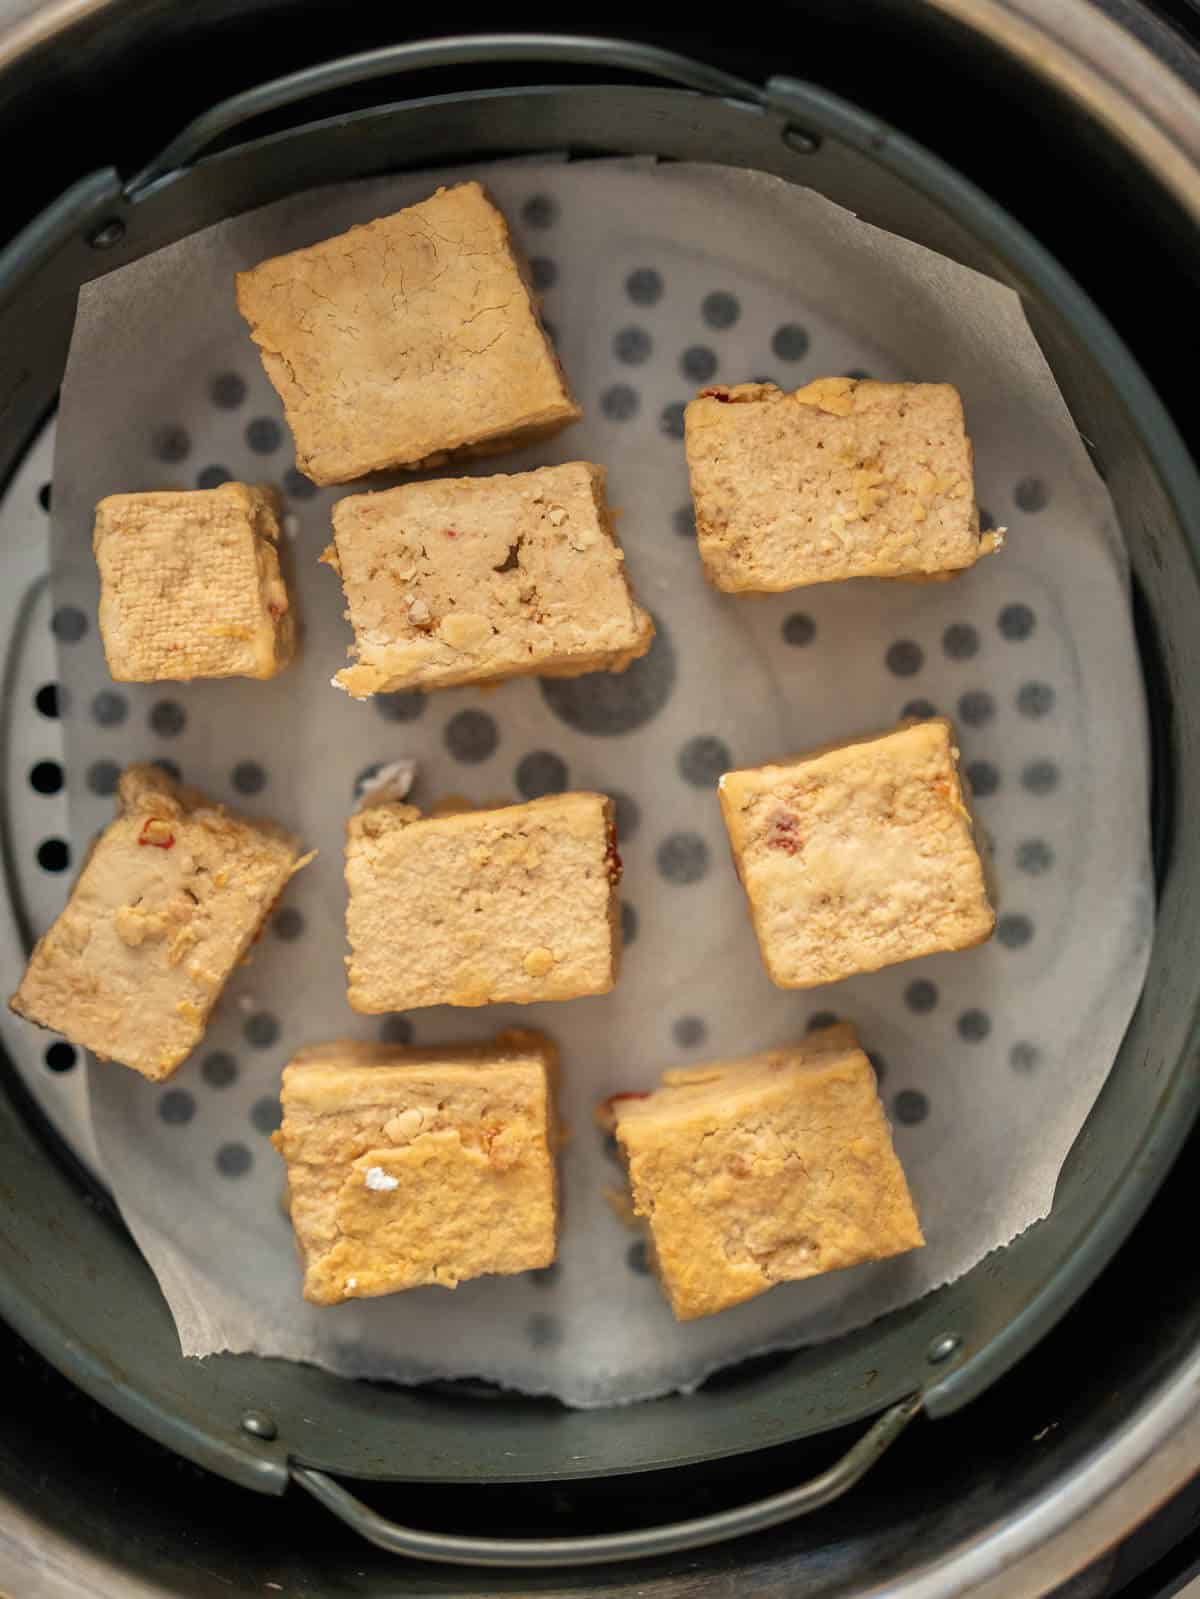 tofu cubes with space between each in air fryer basket.